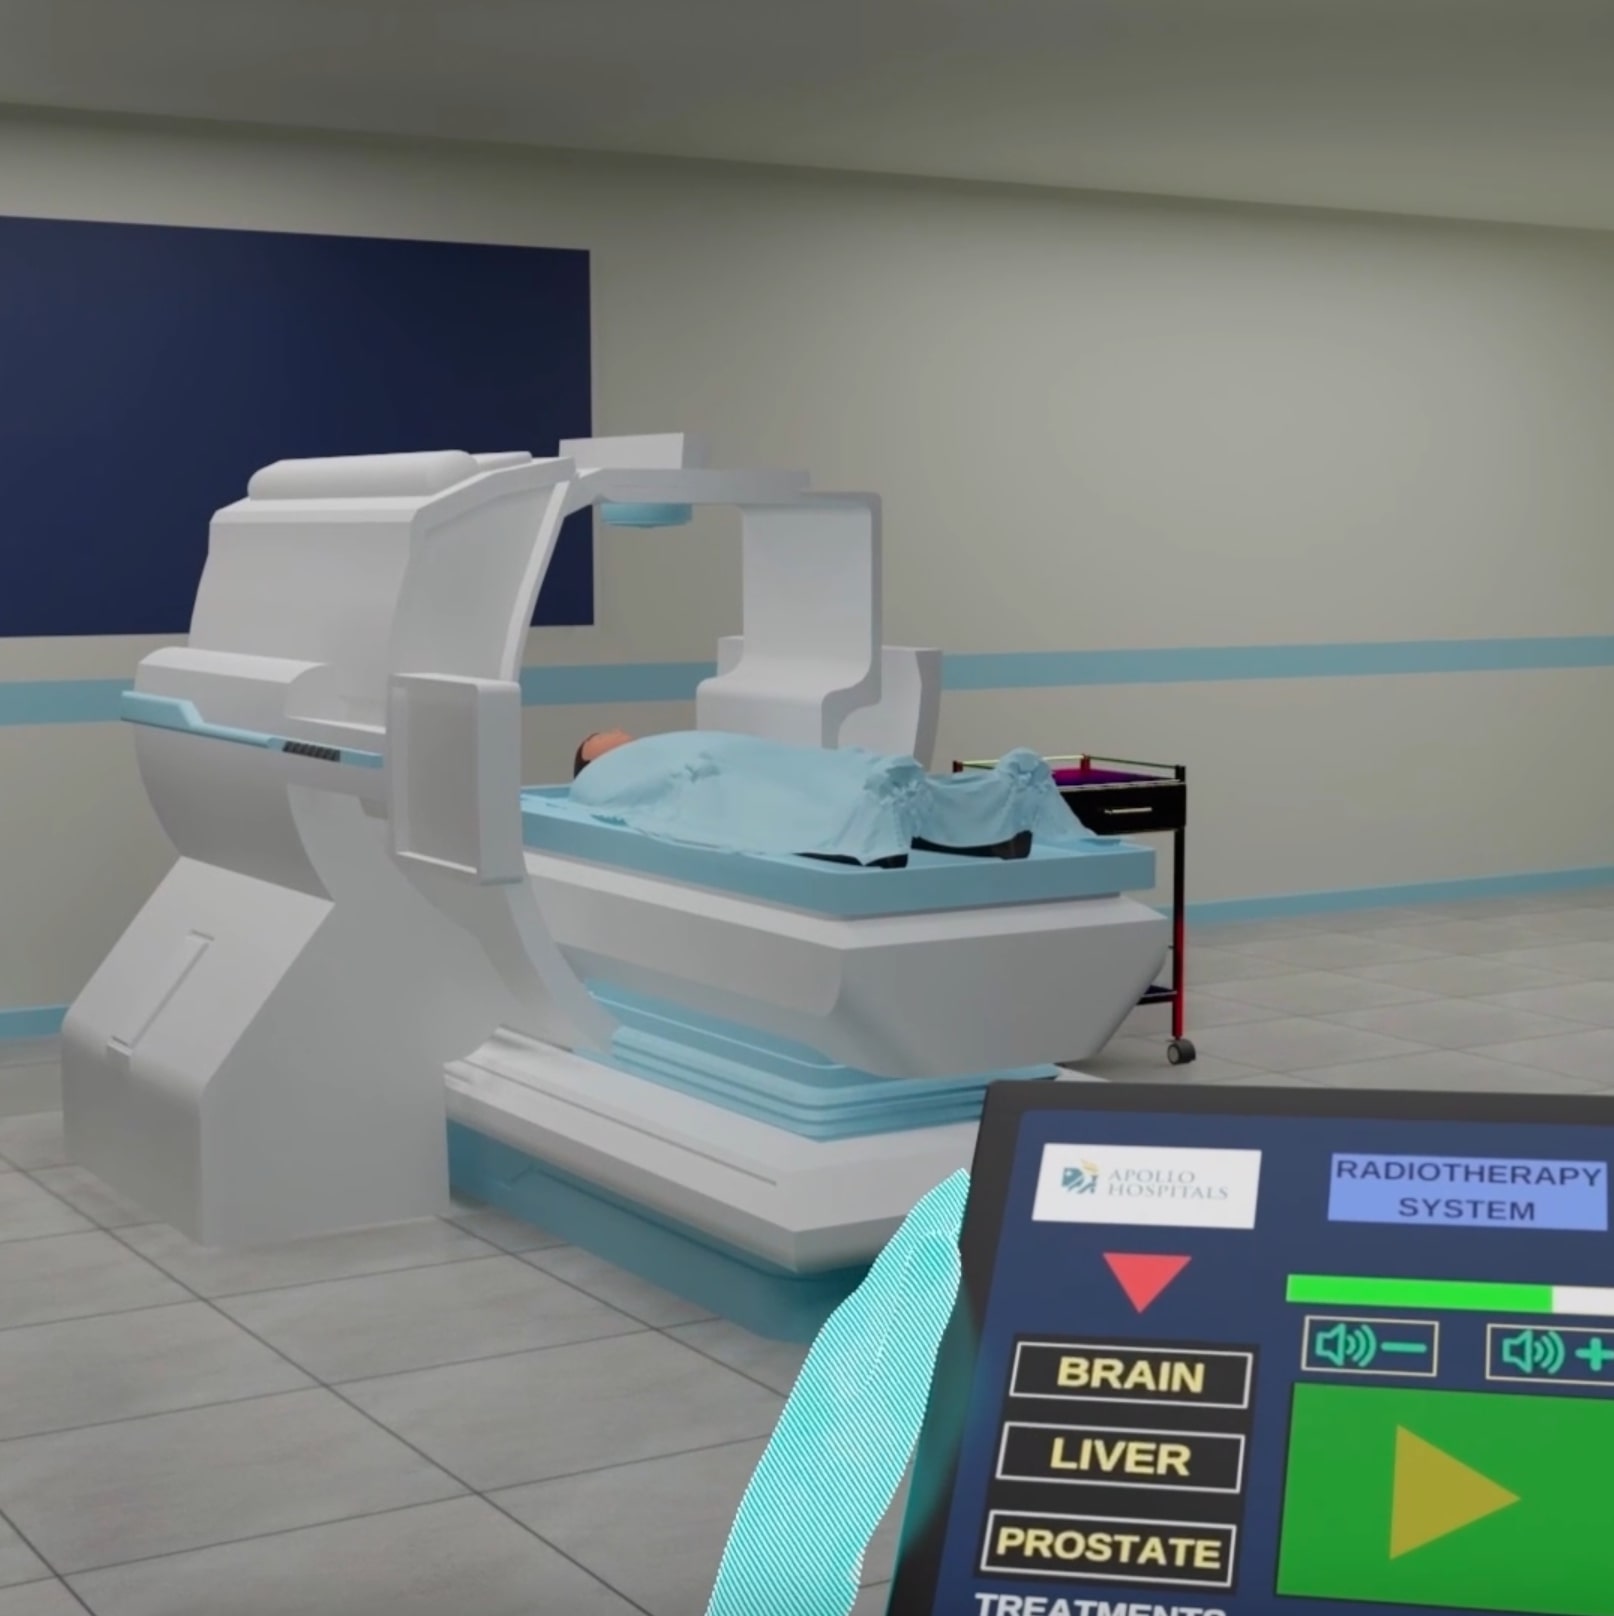 VR Medical MRI, Ultrasound Scanner and Radiotherapy Simulation